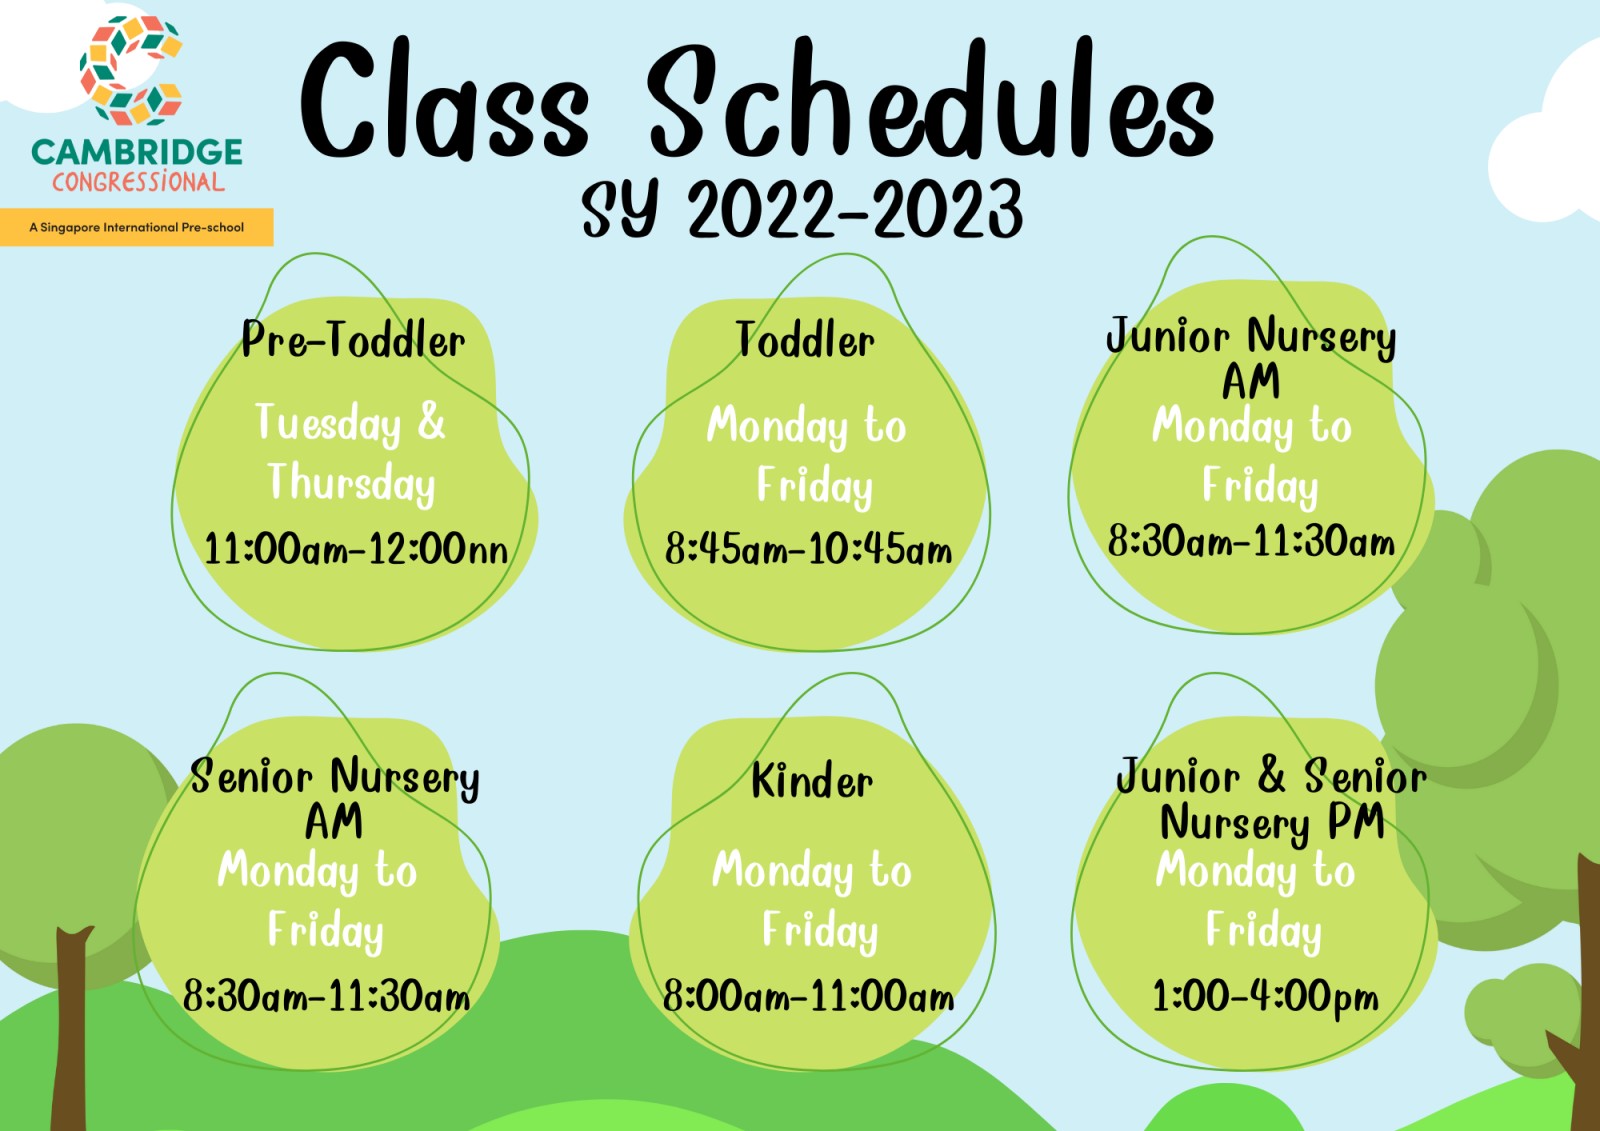 Cambridge Congressional Class Schedule